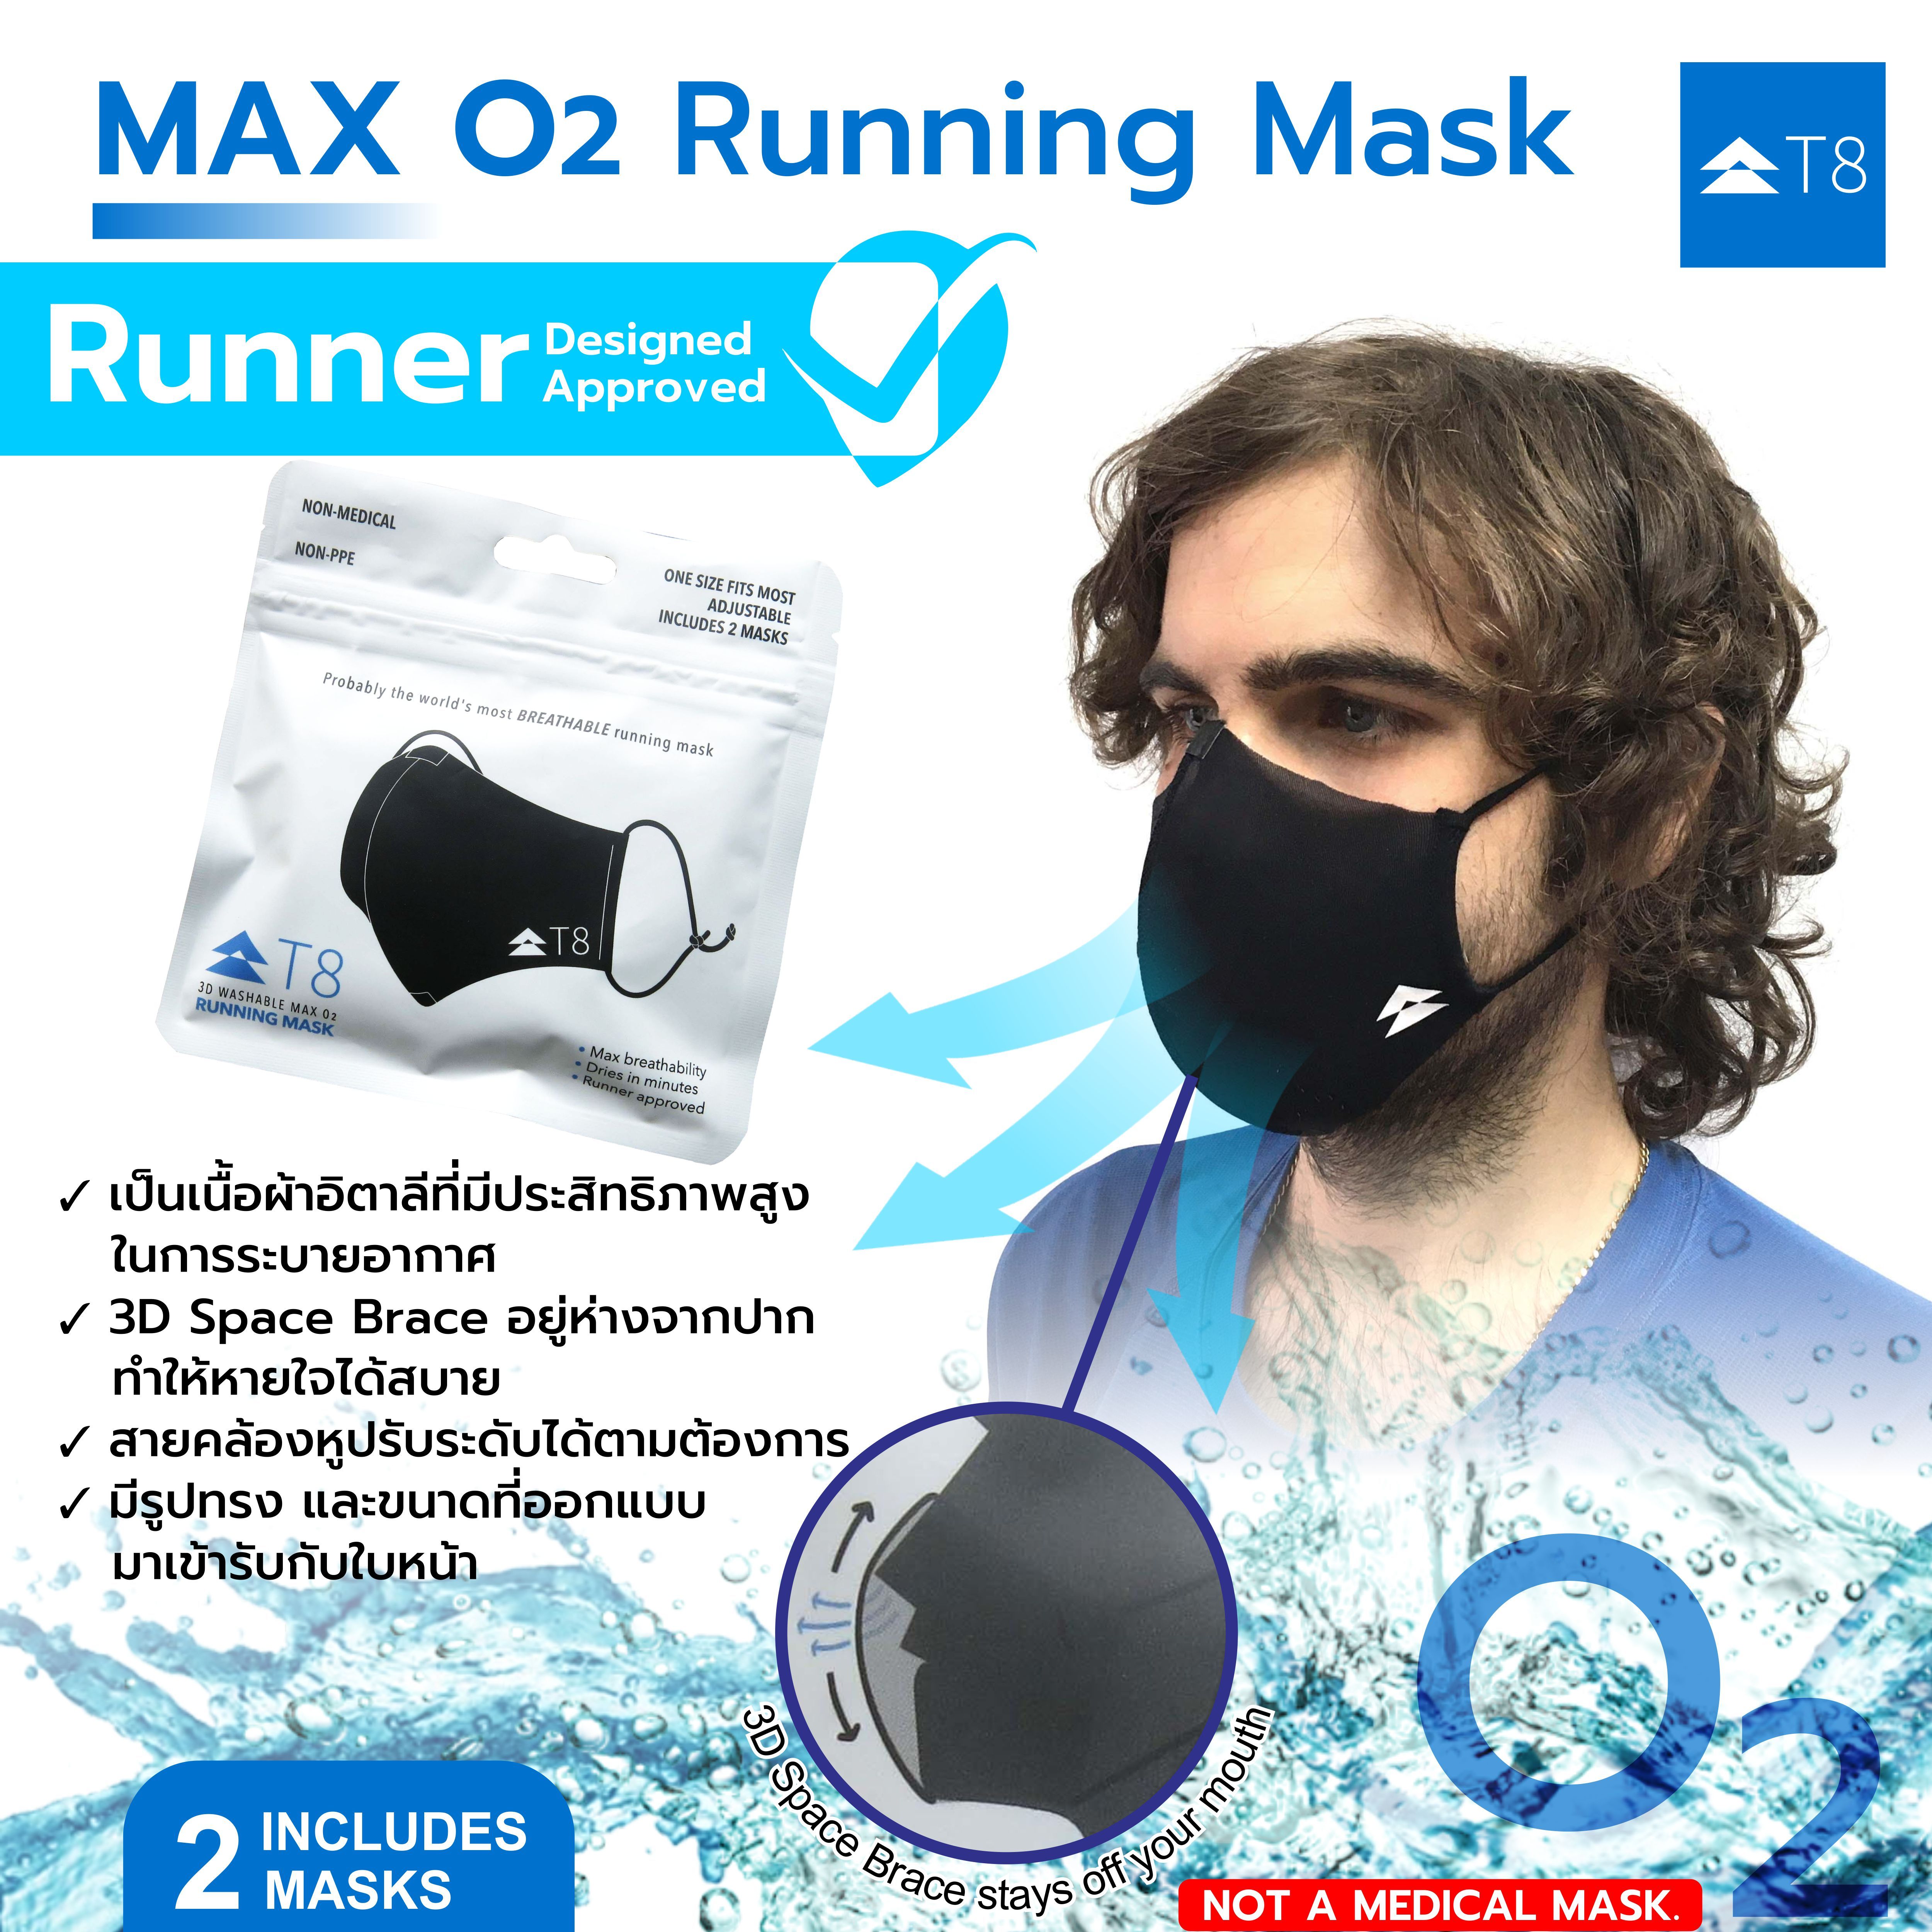 T8 Run แมส์ก หน้ากาก ใส่วิ่ง MAX O2 Running Mask